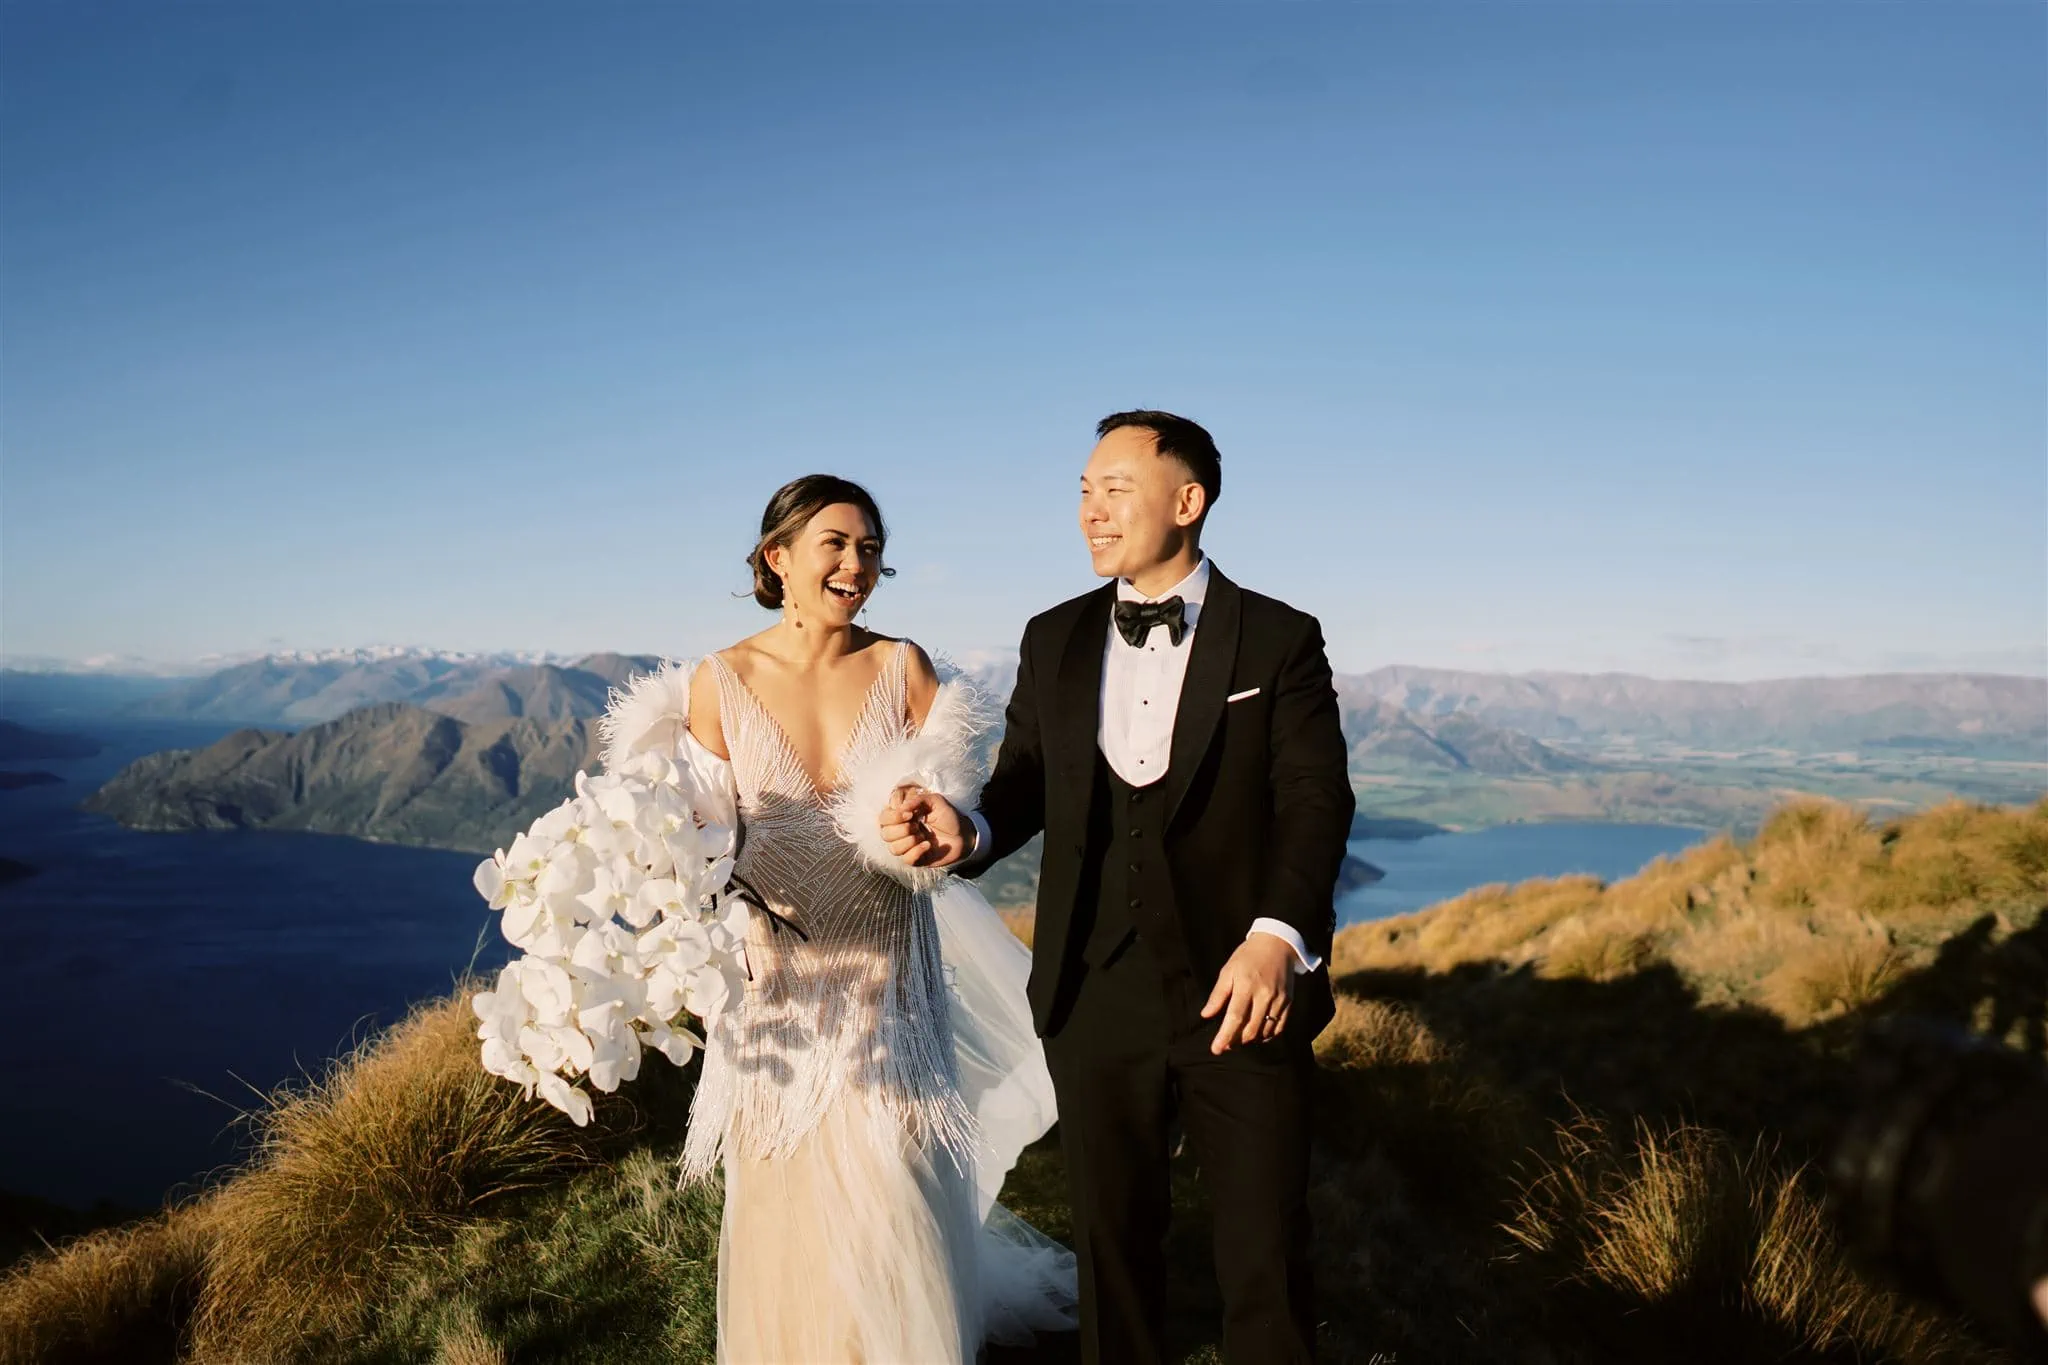 Queenstown New Zealand Elopement Wedding Photographer - A bride and groom enjoying a queenstown heli-wedding package, standing on top of a mountain overlooking Lake Wanaka.